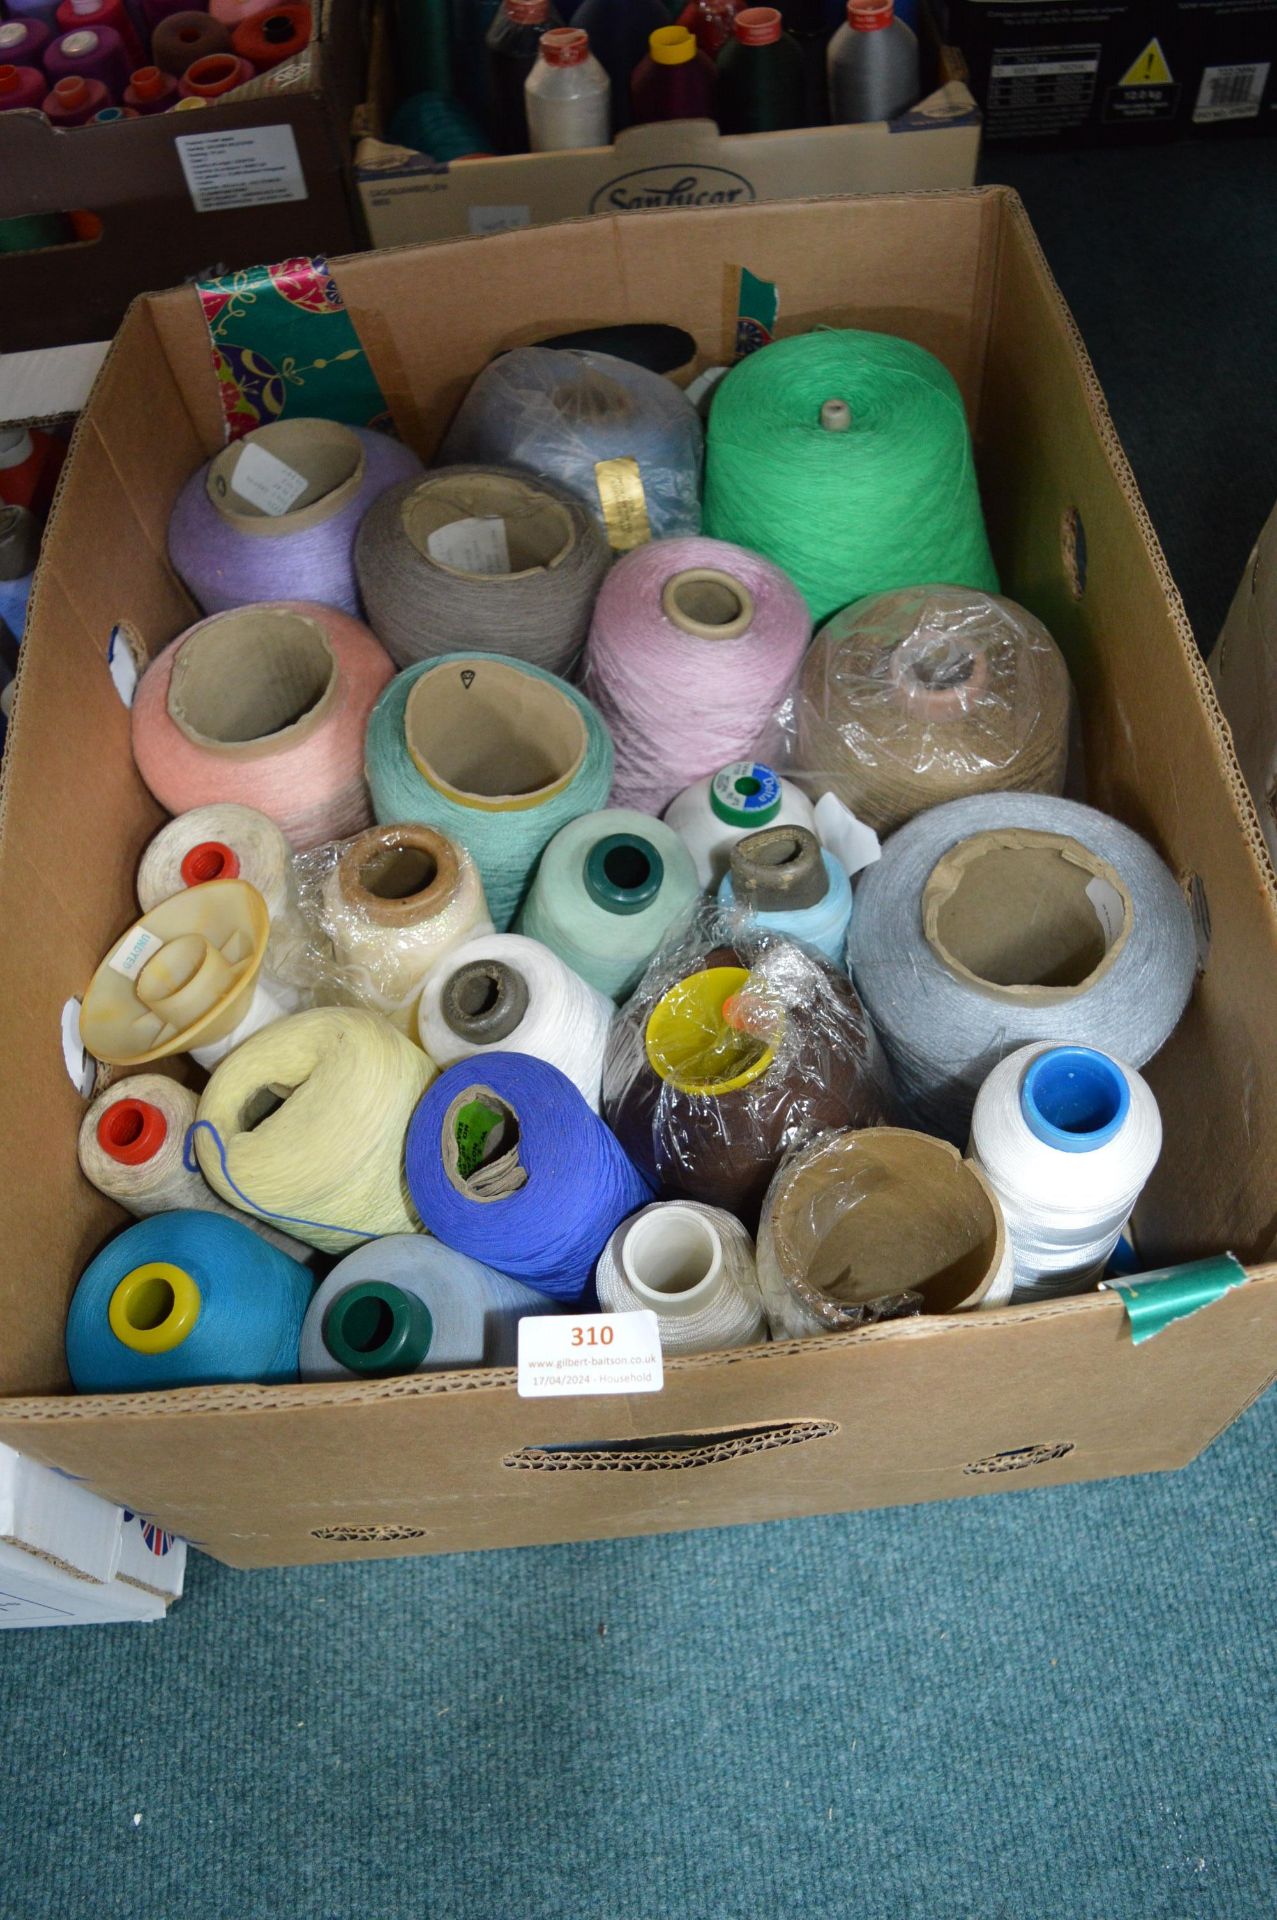 Assorted Spools of Yarn